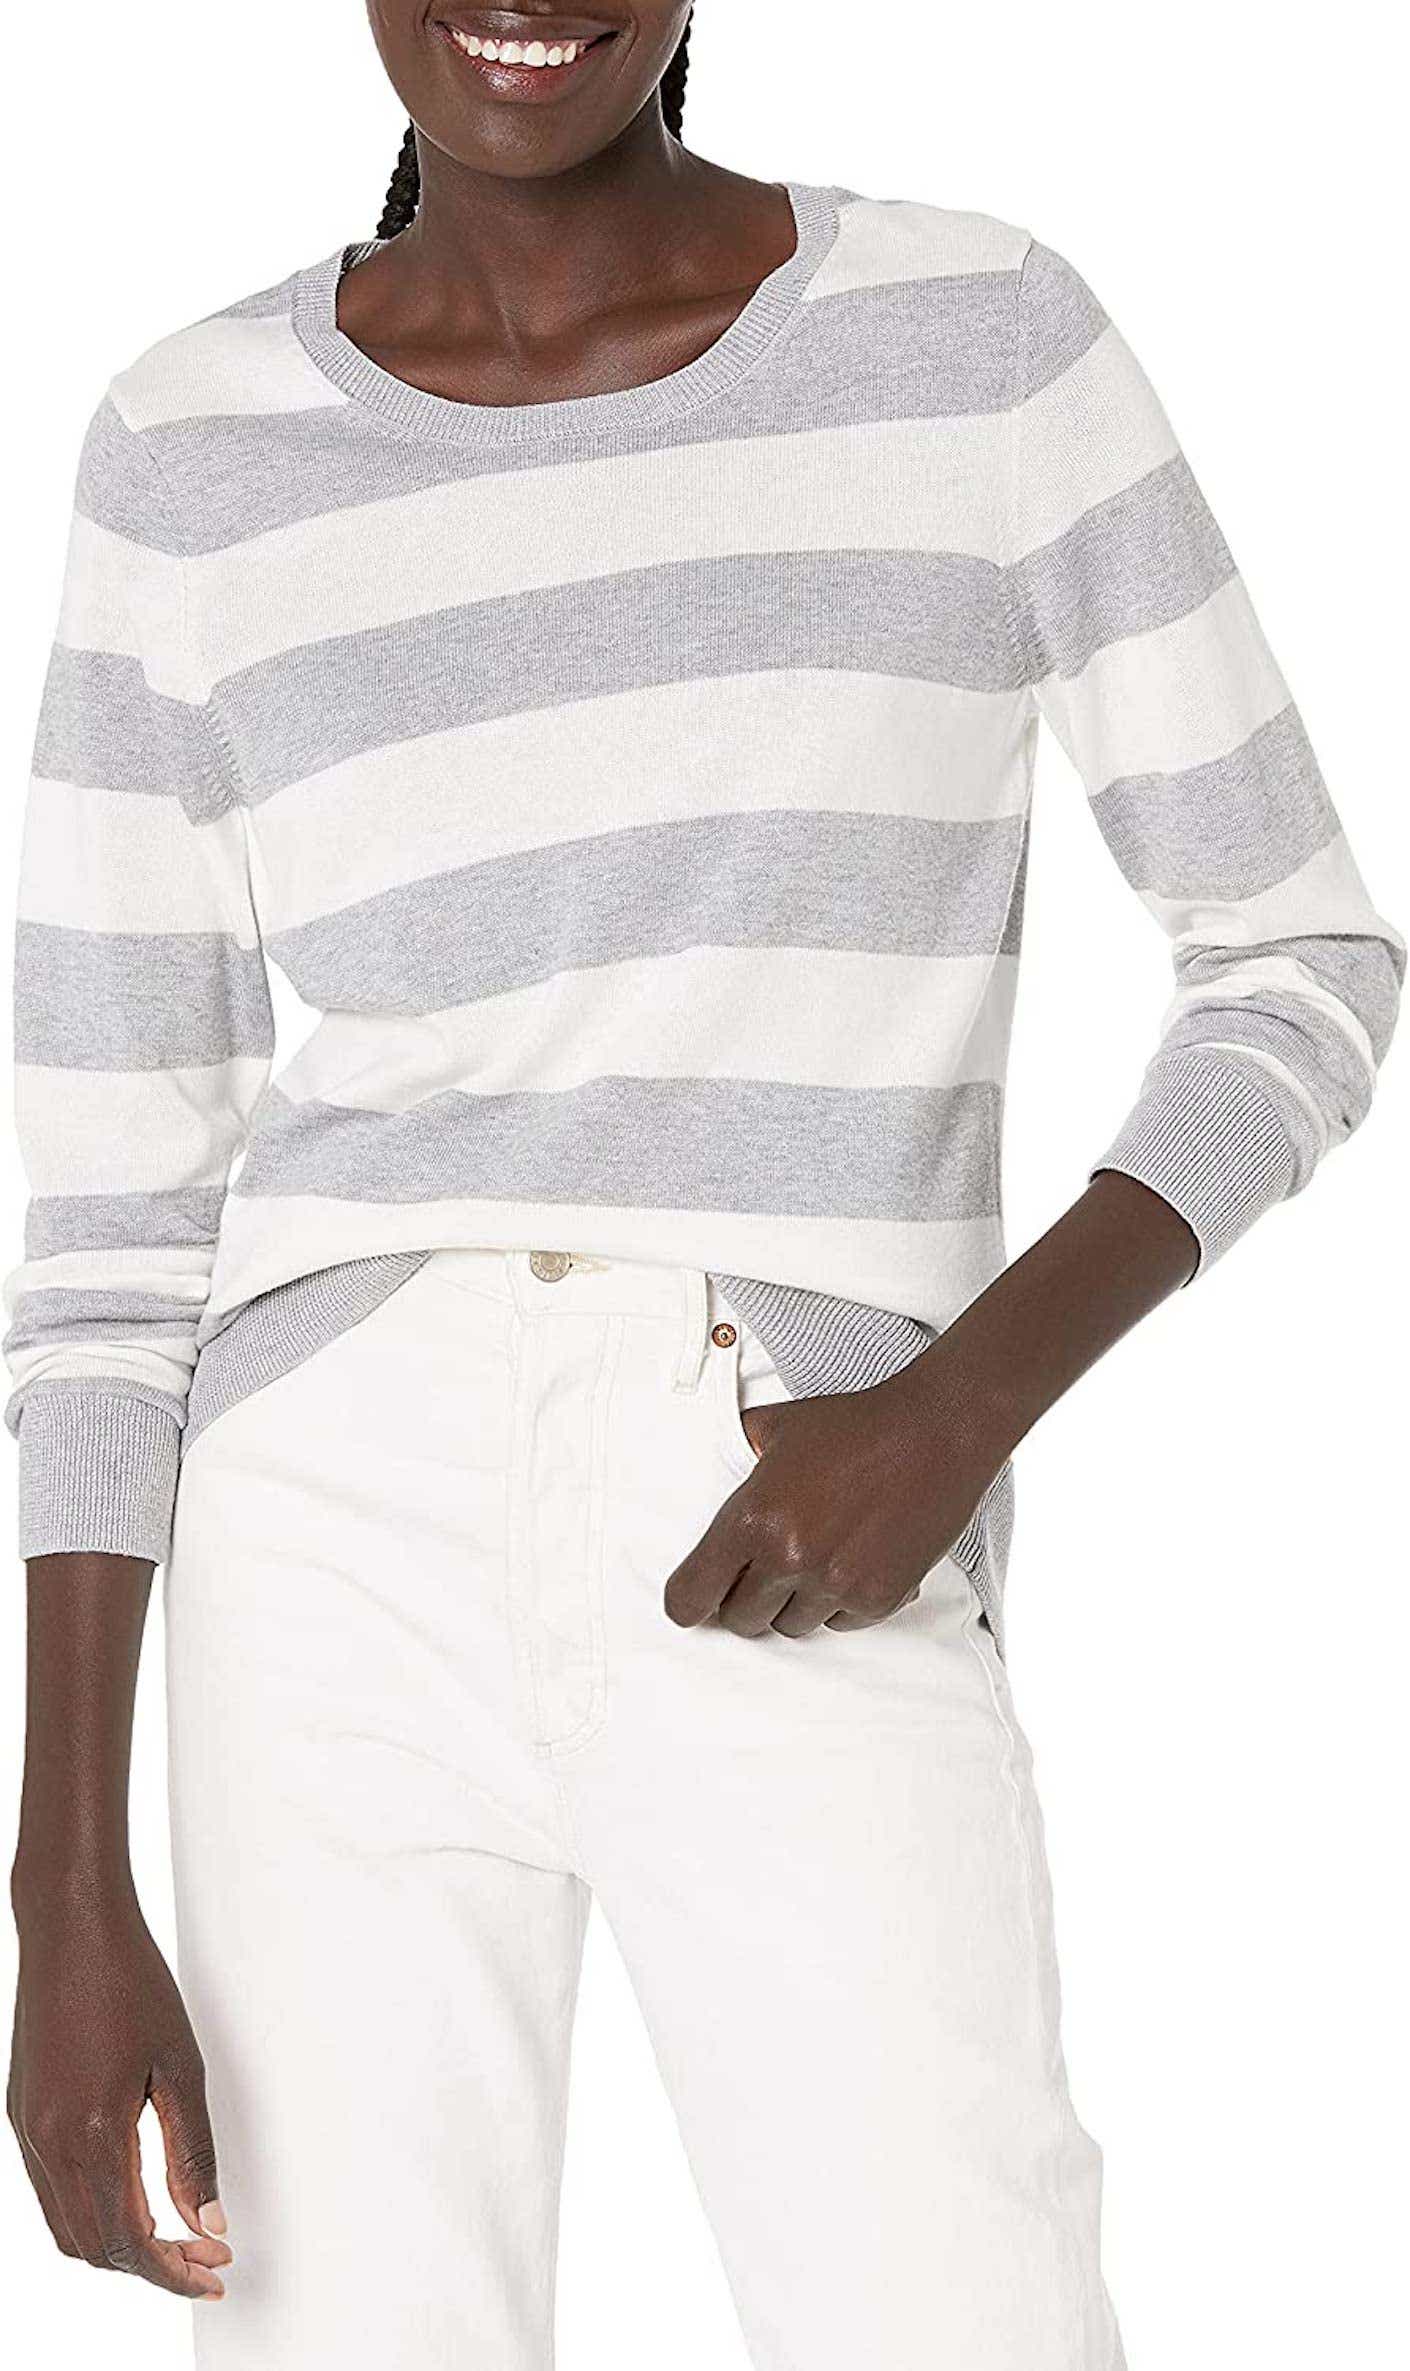 a striped crew neck sweater